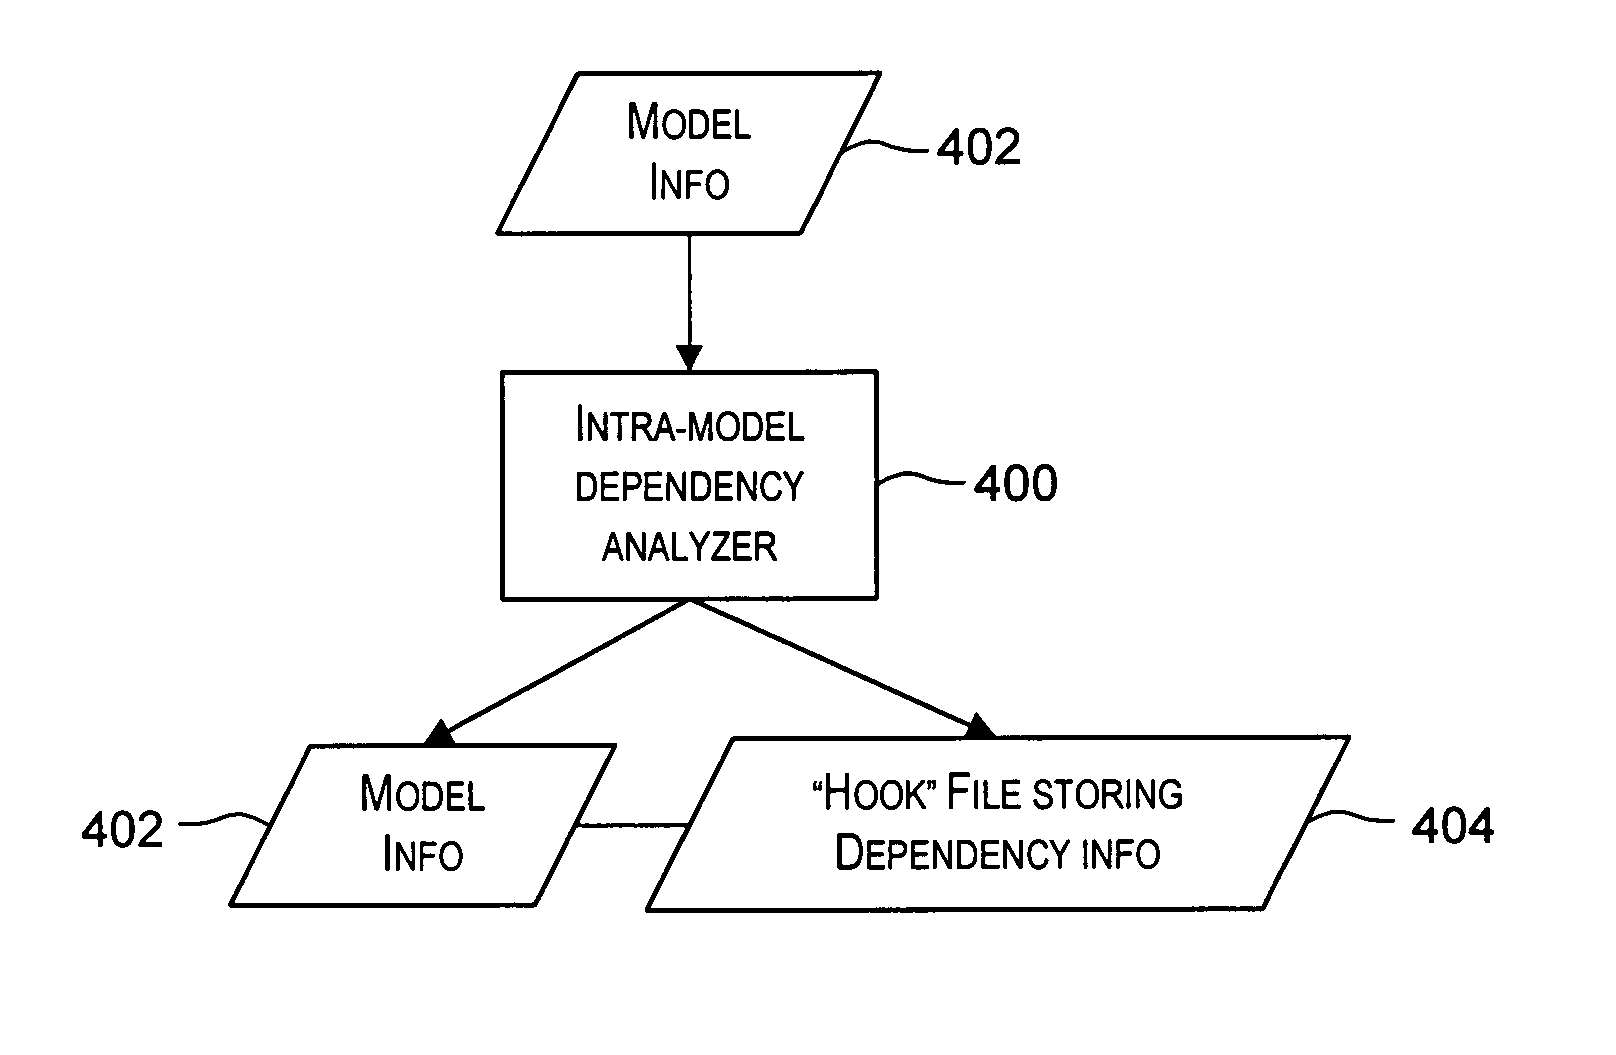 Storing intra-model dependency information